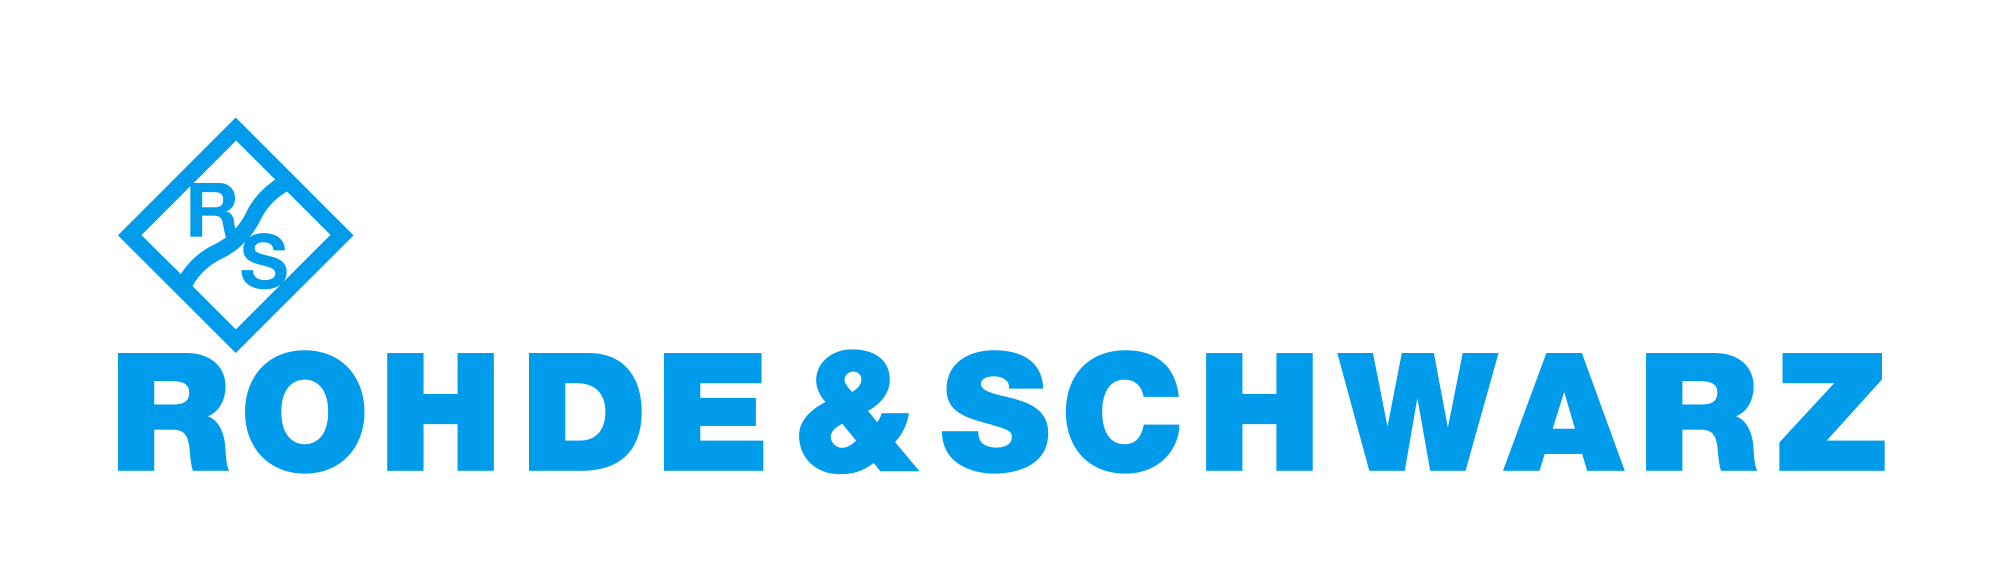 Rohde and Schwarz logo 